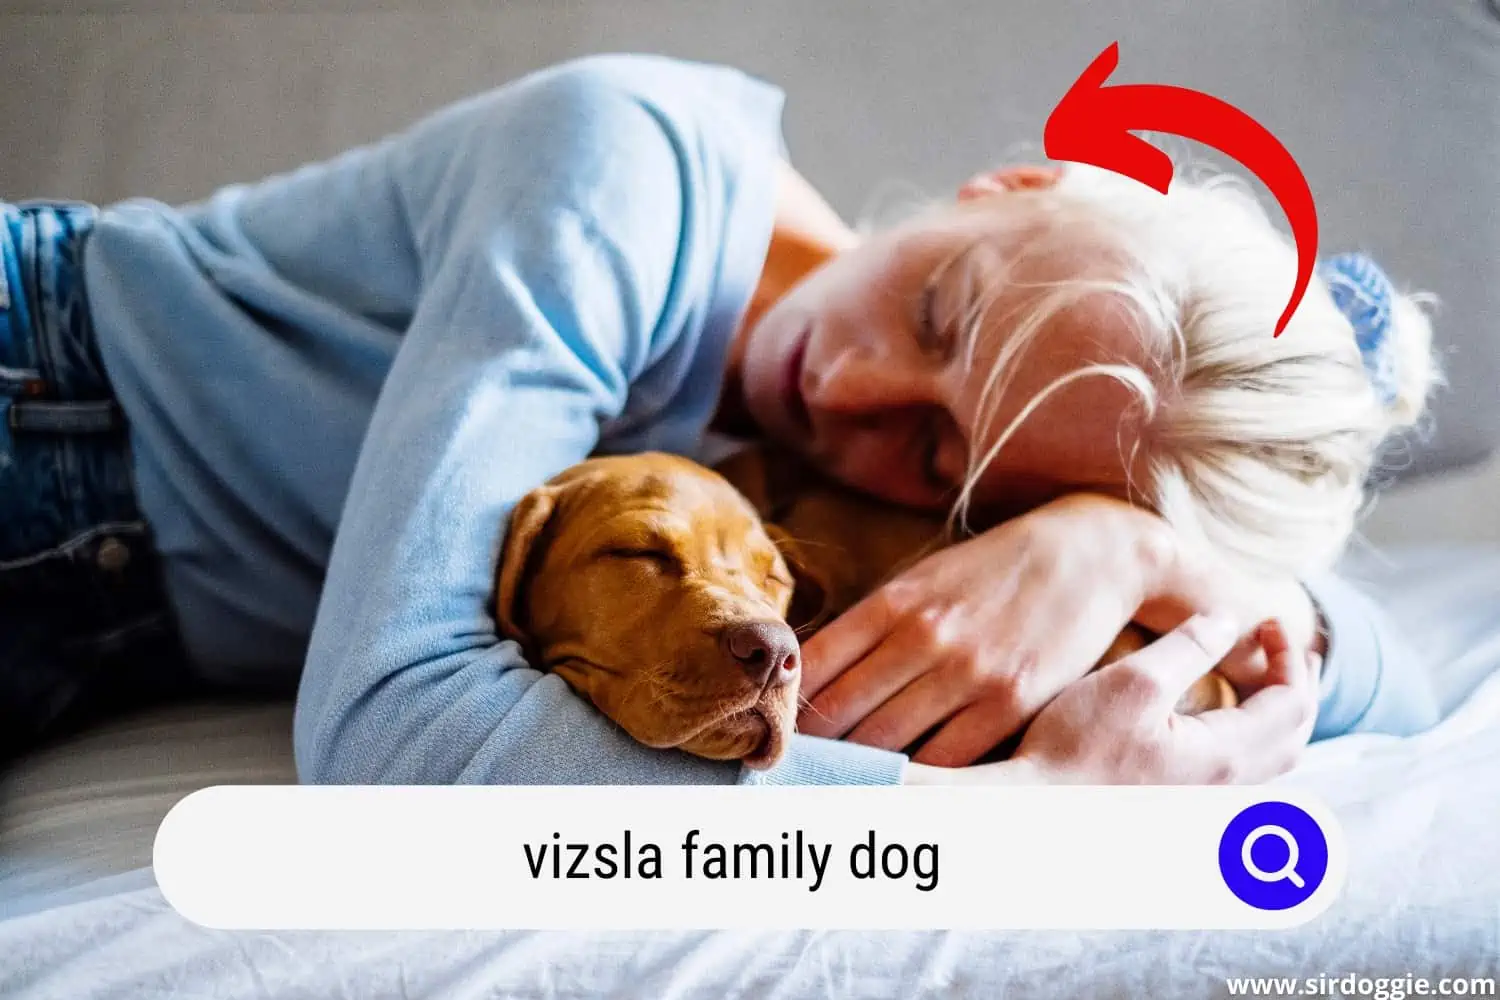 Vizsla family dog sleeping together with pet owner